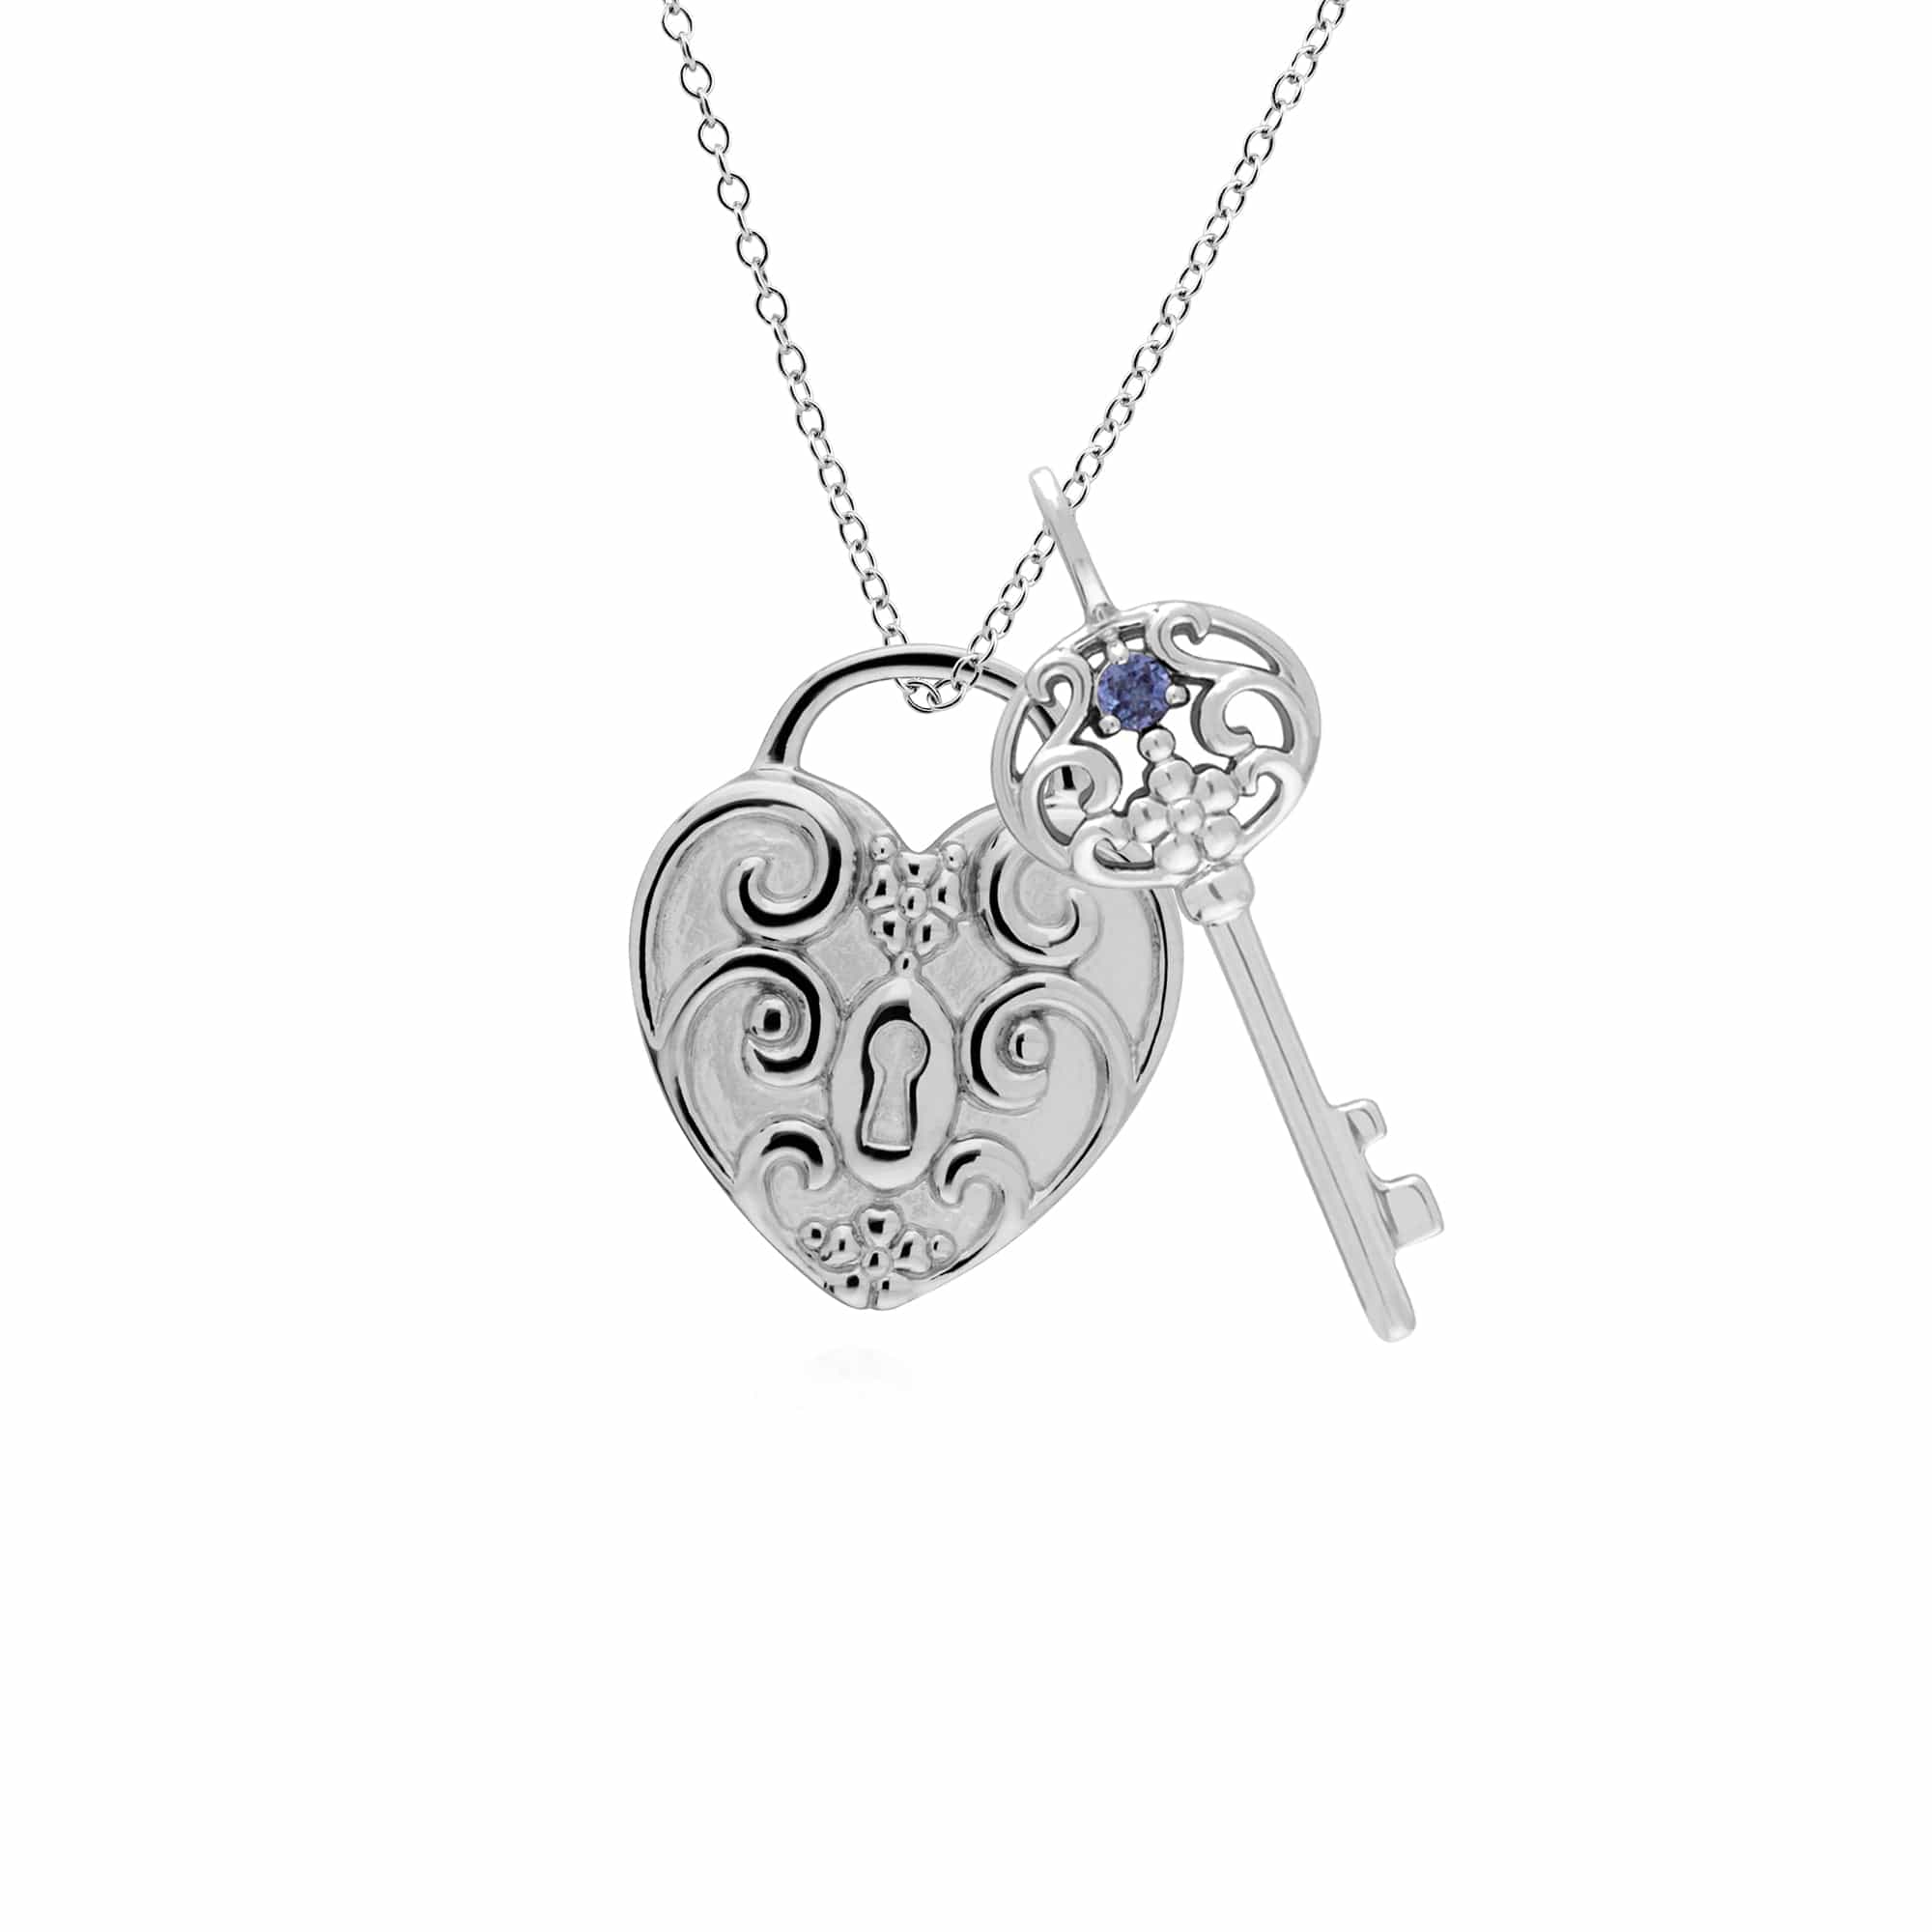 270P026812925-270P026601925 Classic Swirl Heart Lock Pendant & Tanzanite Big Key Charm in 925 Sterling Silver 1